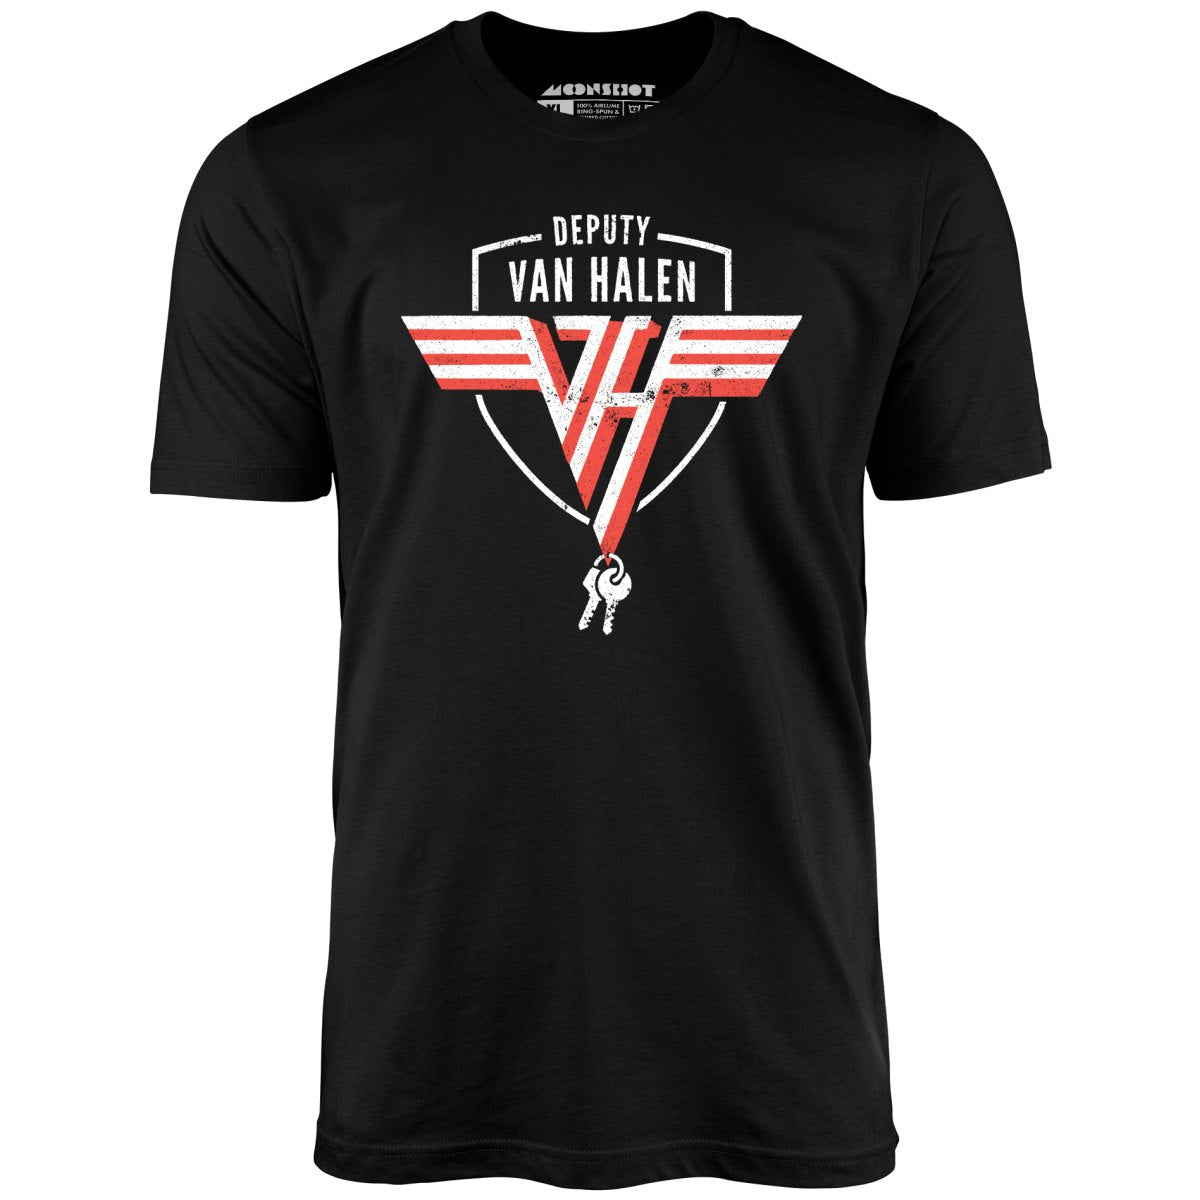 Deputy Van Halen - Unisex T-Shirt